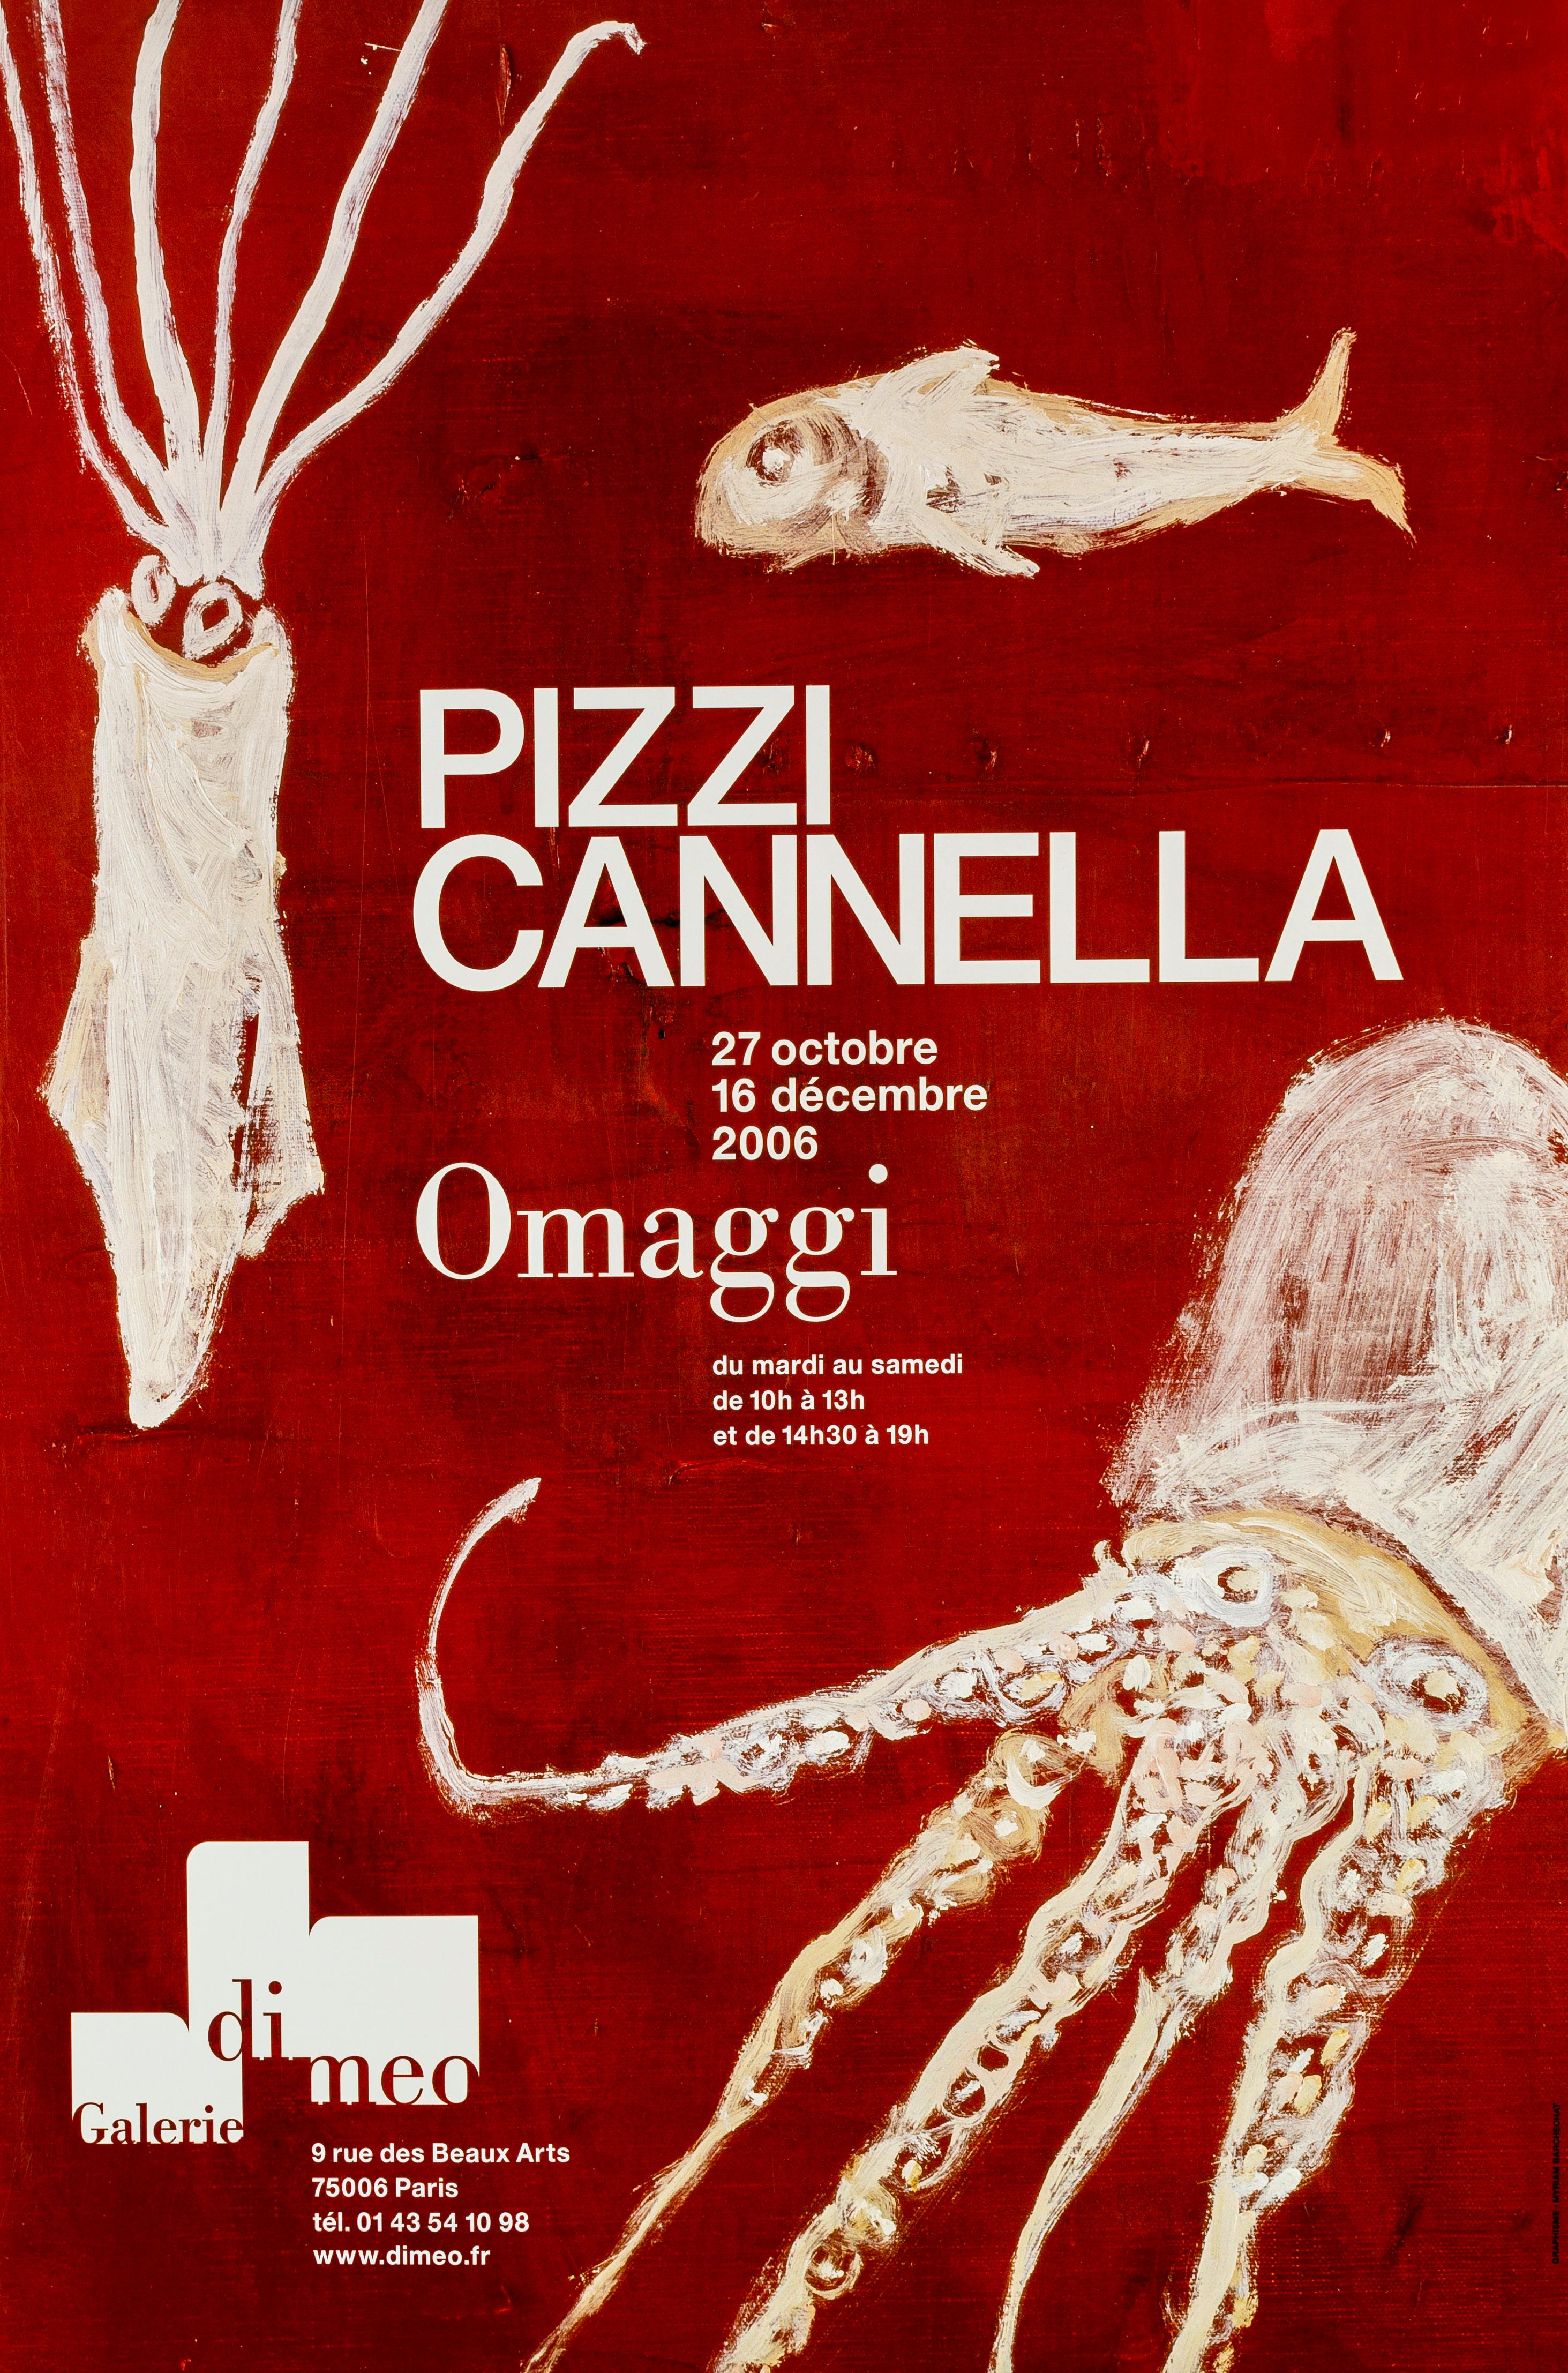 Pizzi Cannella Exhibition Poster - 2006